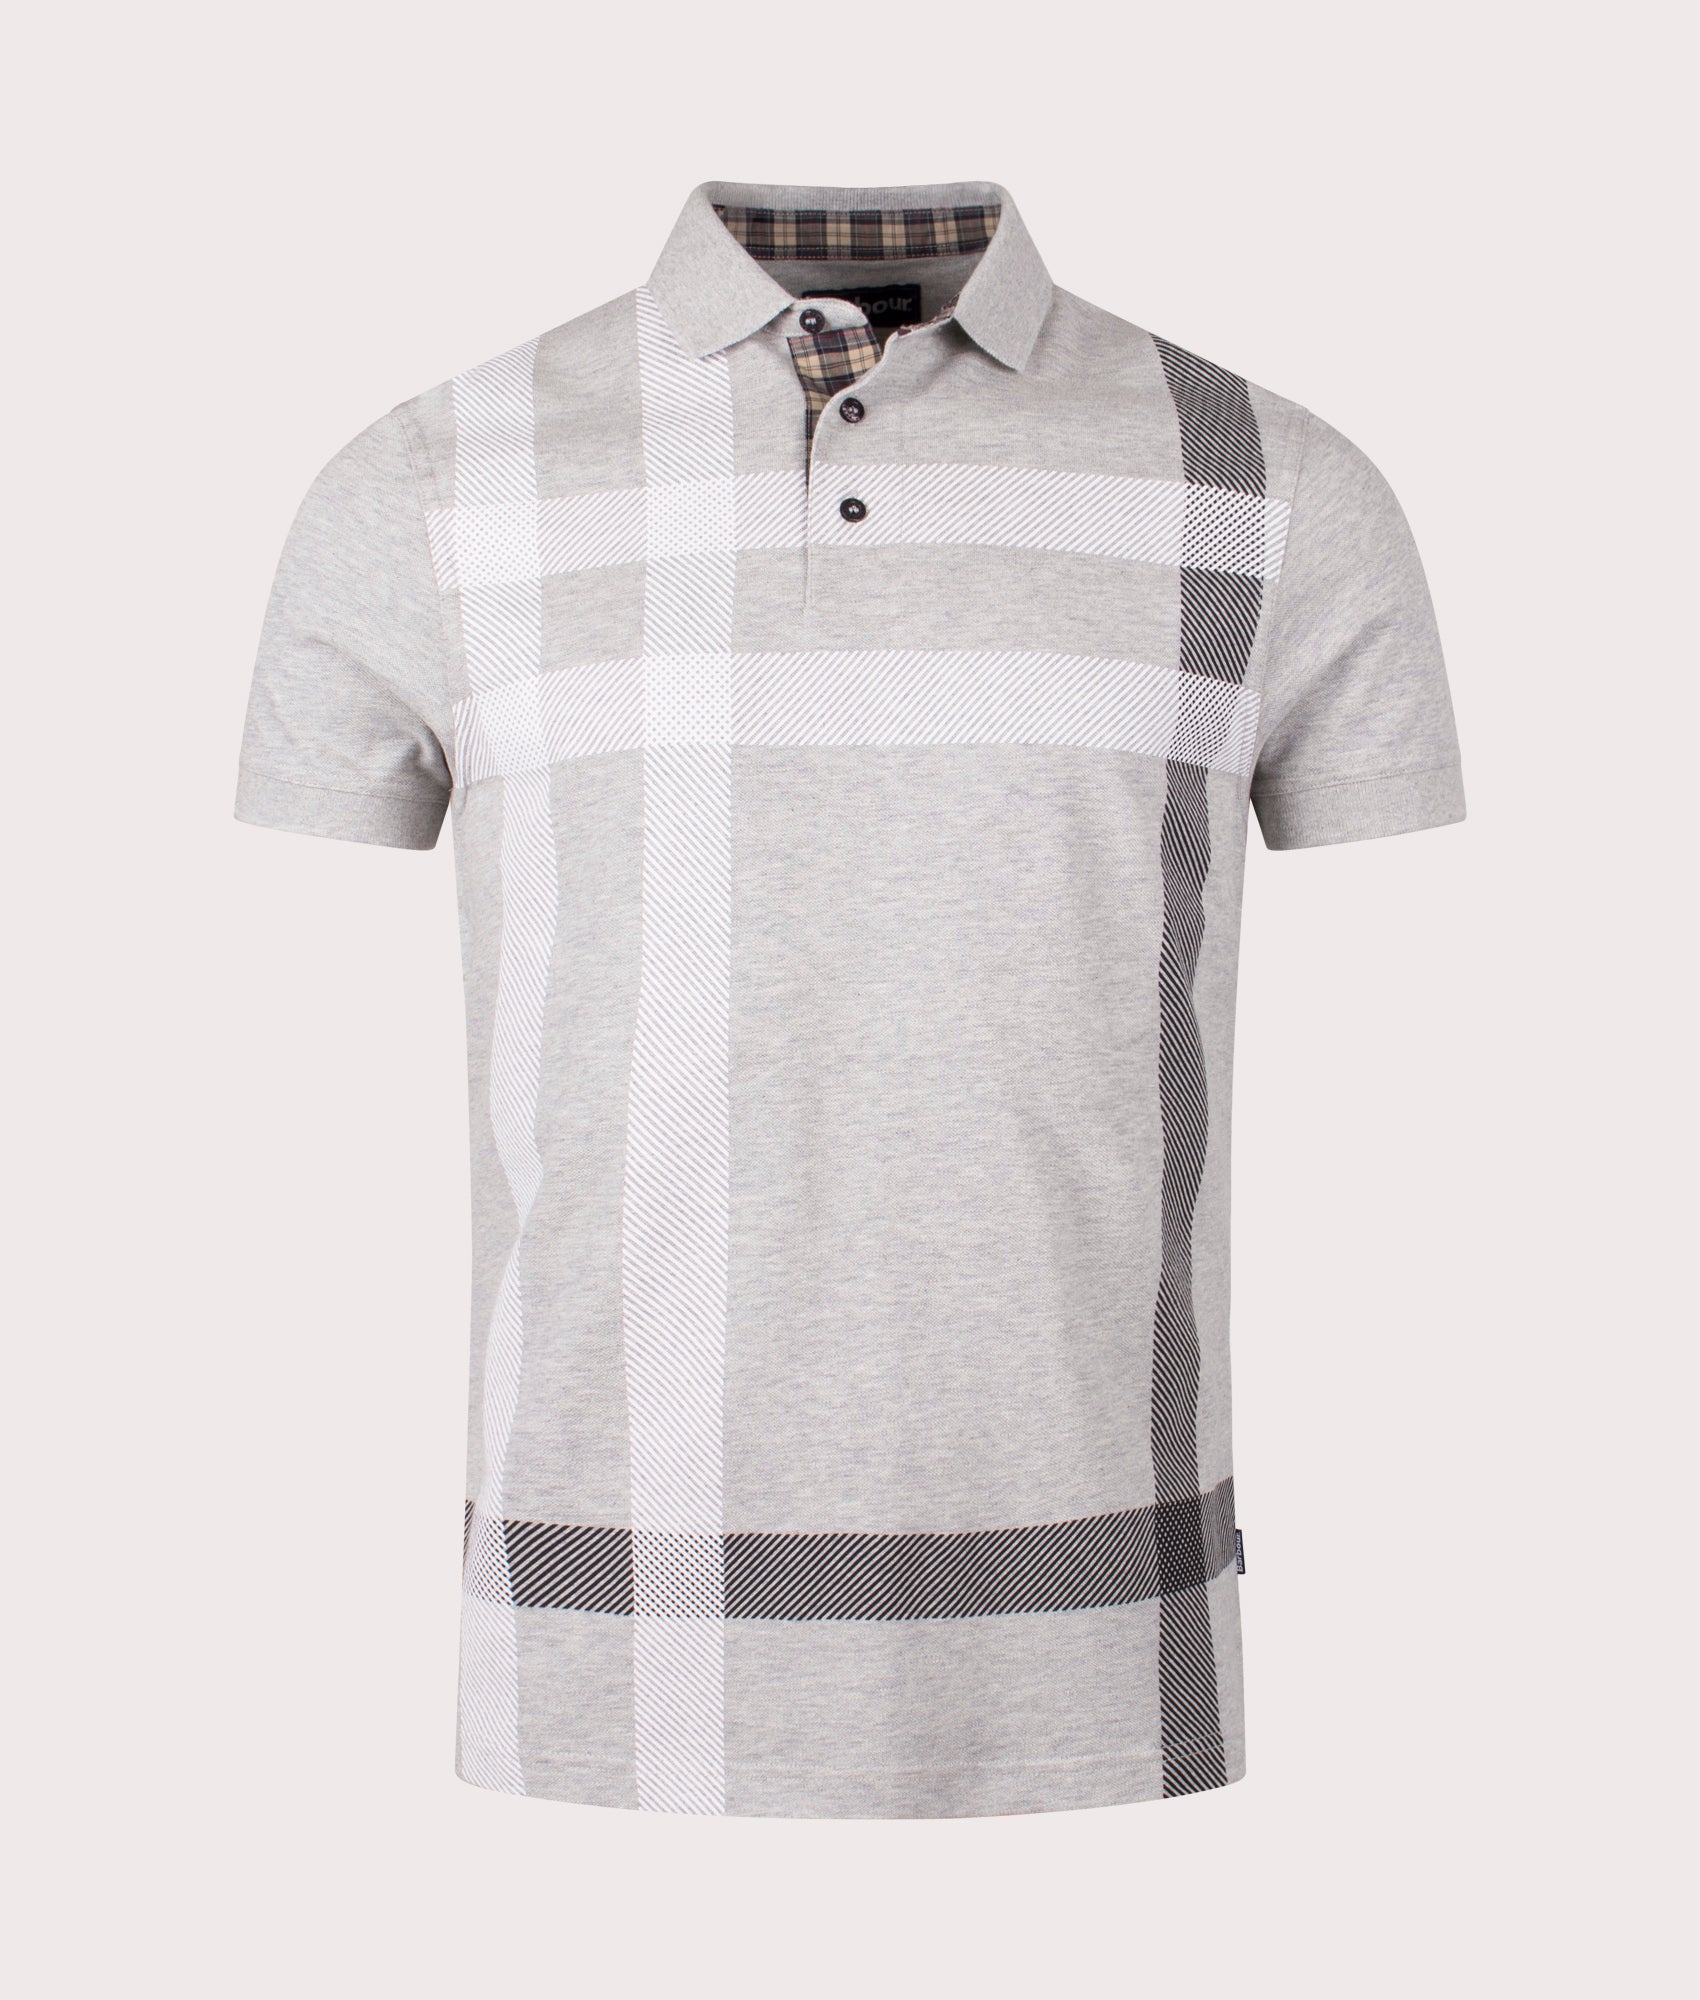 Barbour Lifestyle Mens Blaine Polo Shirt - Colour: GY52 Grey Marl - Size: Large